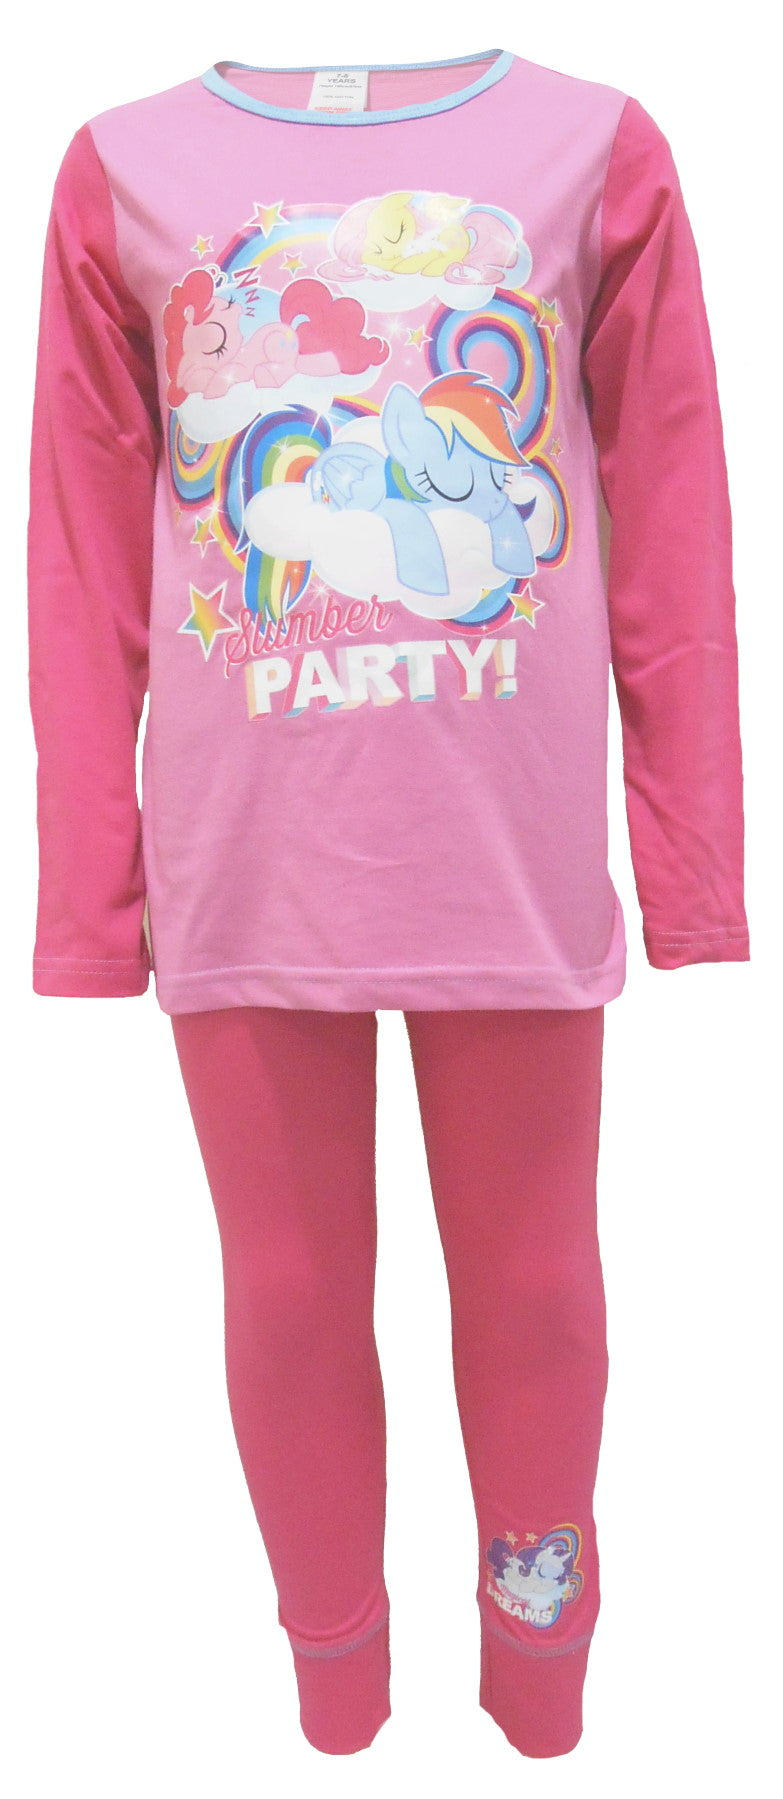 My Little Pony "Slumber Party" Girls Pyjamas